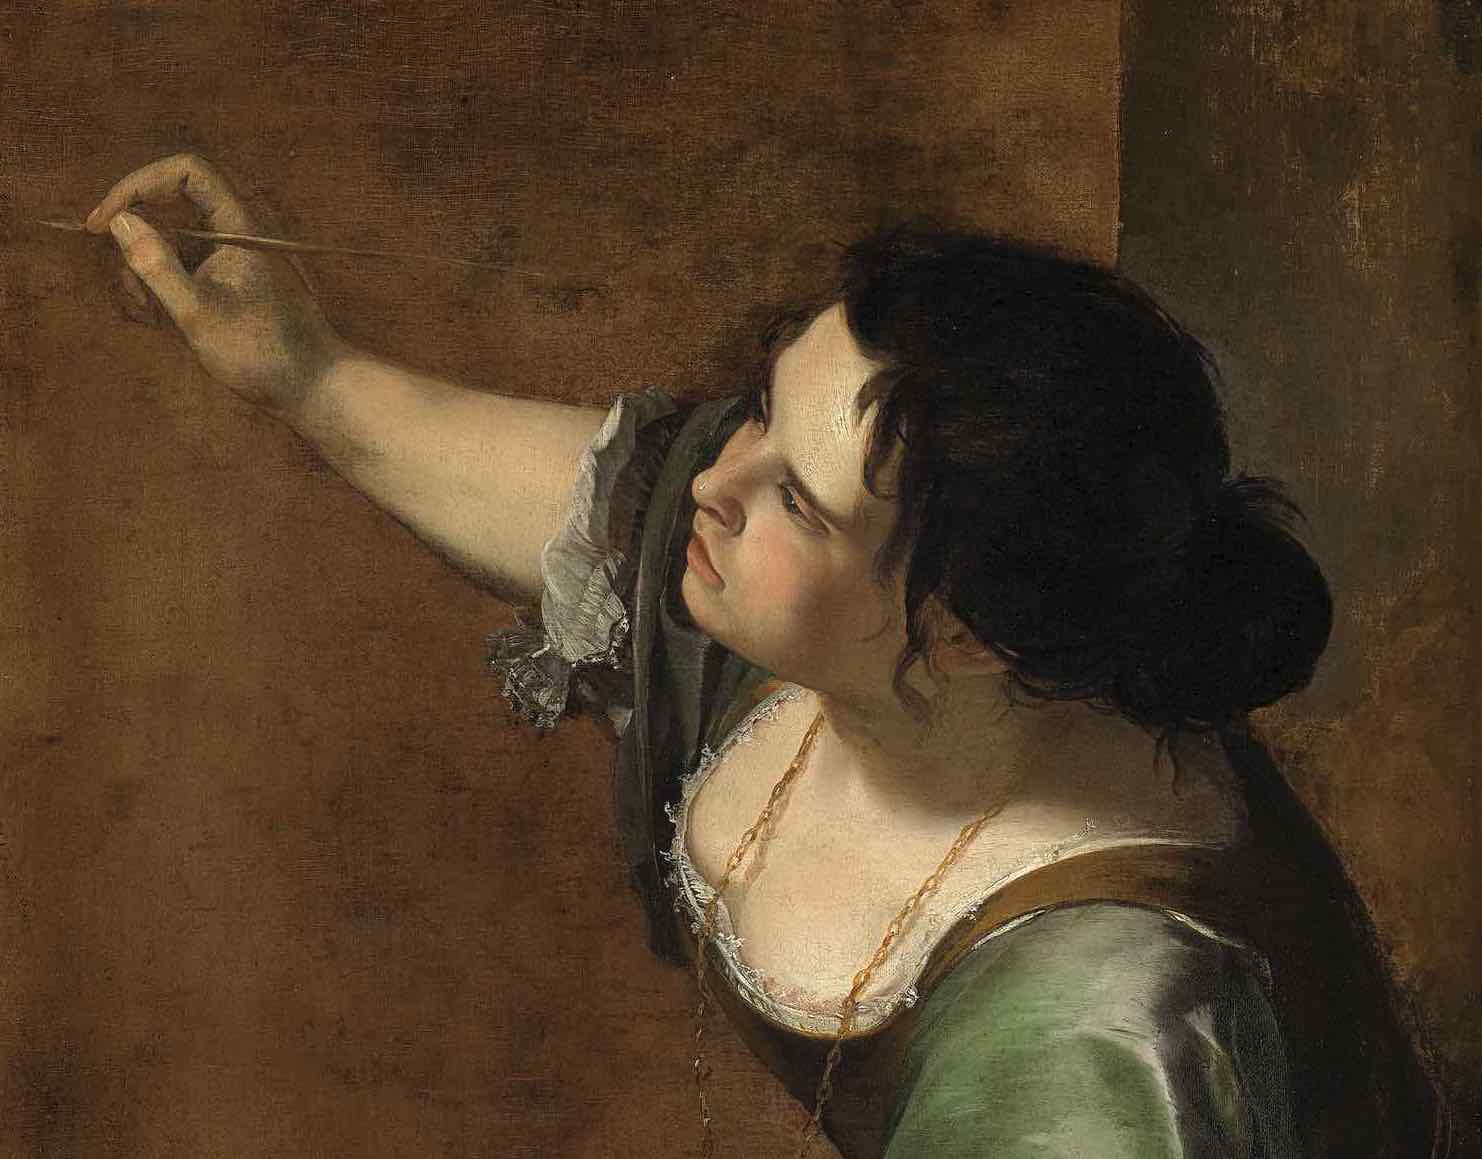 Pittura al femminile: Sofonisba Anguissola, Lavinia Fontana e Artemisia Gentileschi